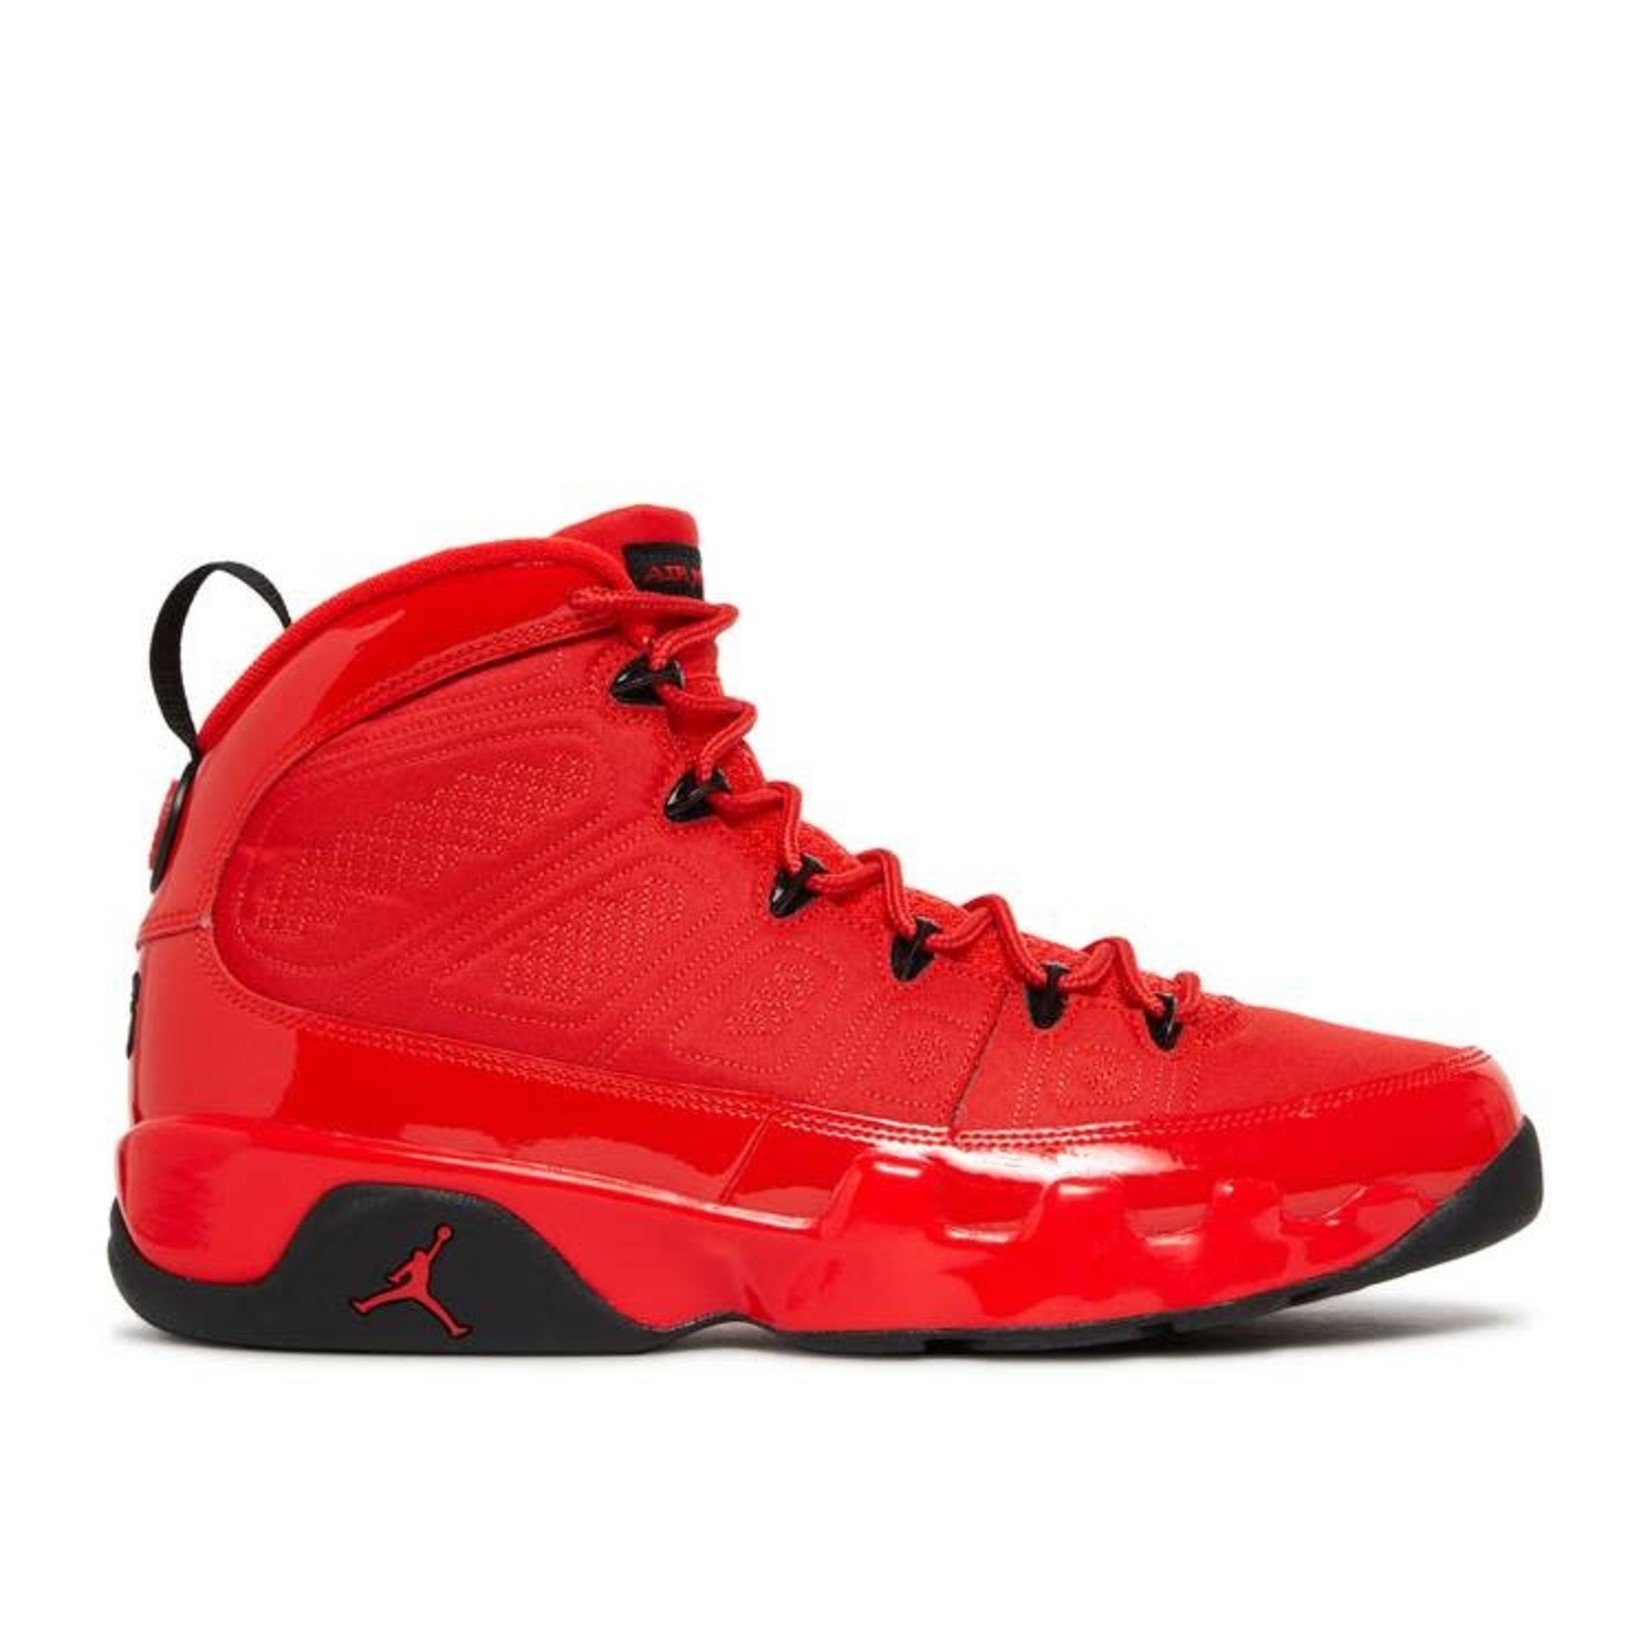 Jordan Jordan 9 Retro Chile Red (GS) Size 6.5Y, DS BRAND NEW